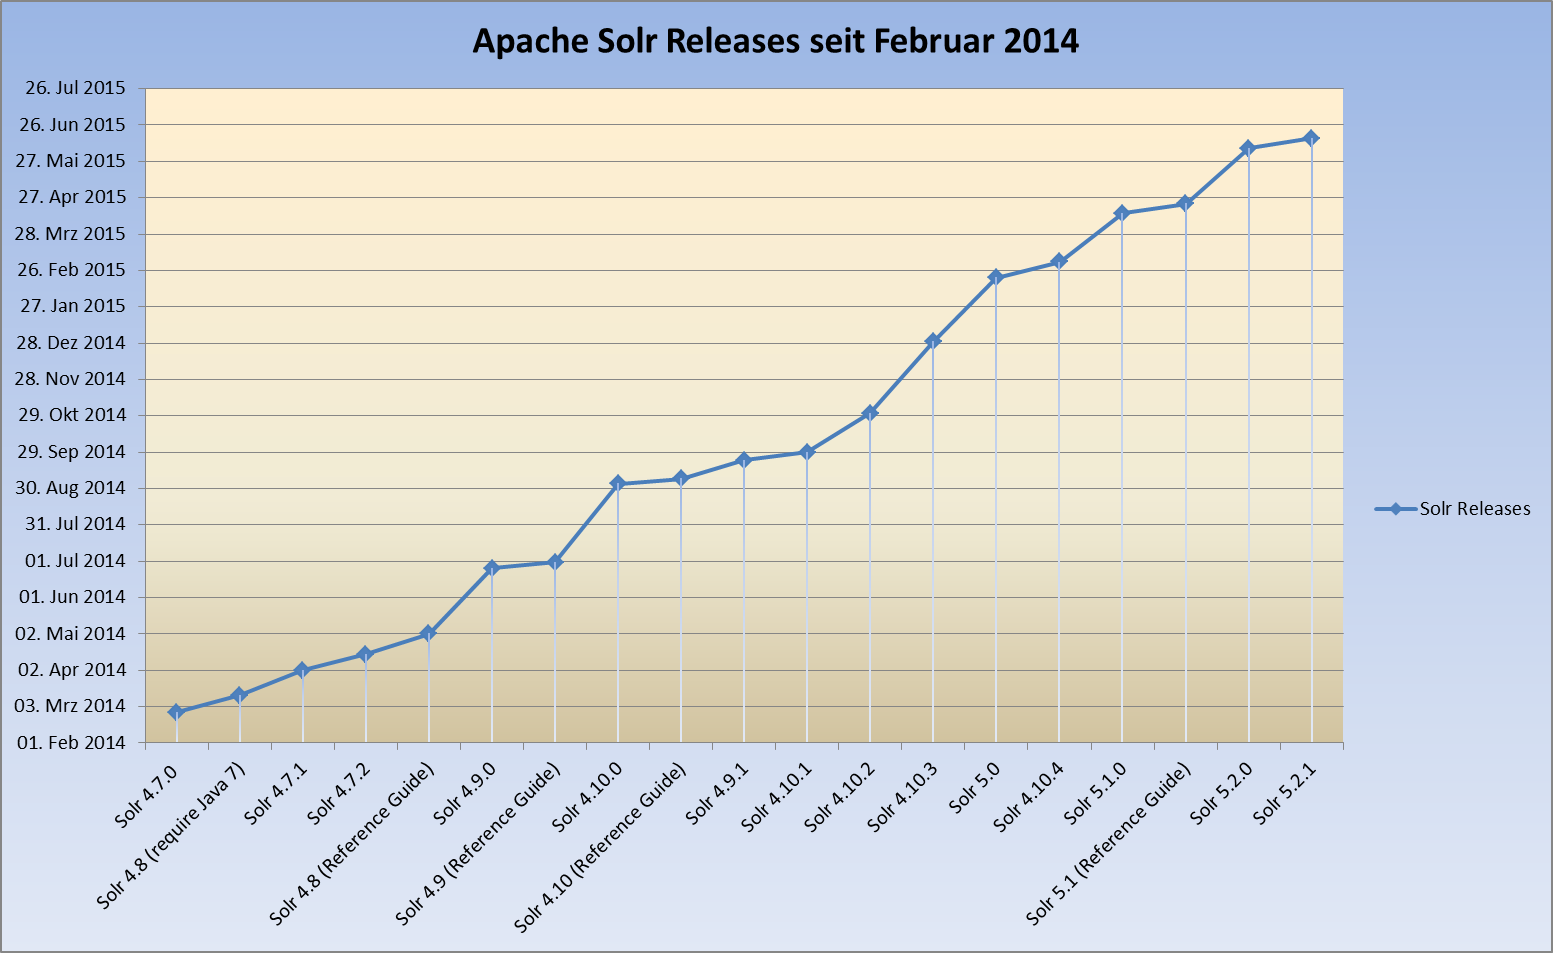 Apache Solr Releases von Februar 2014 bis Mai 2015